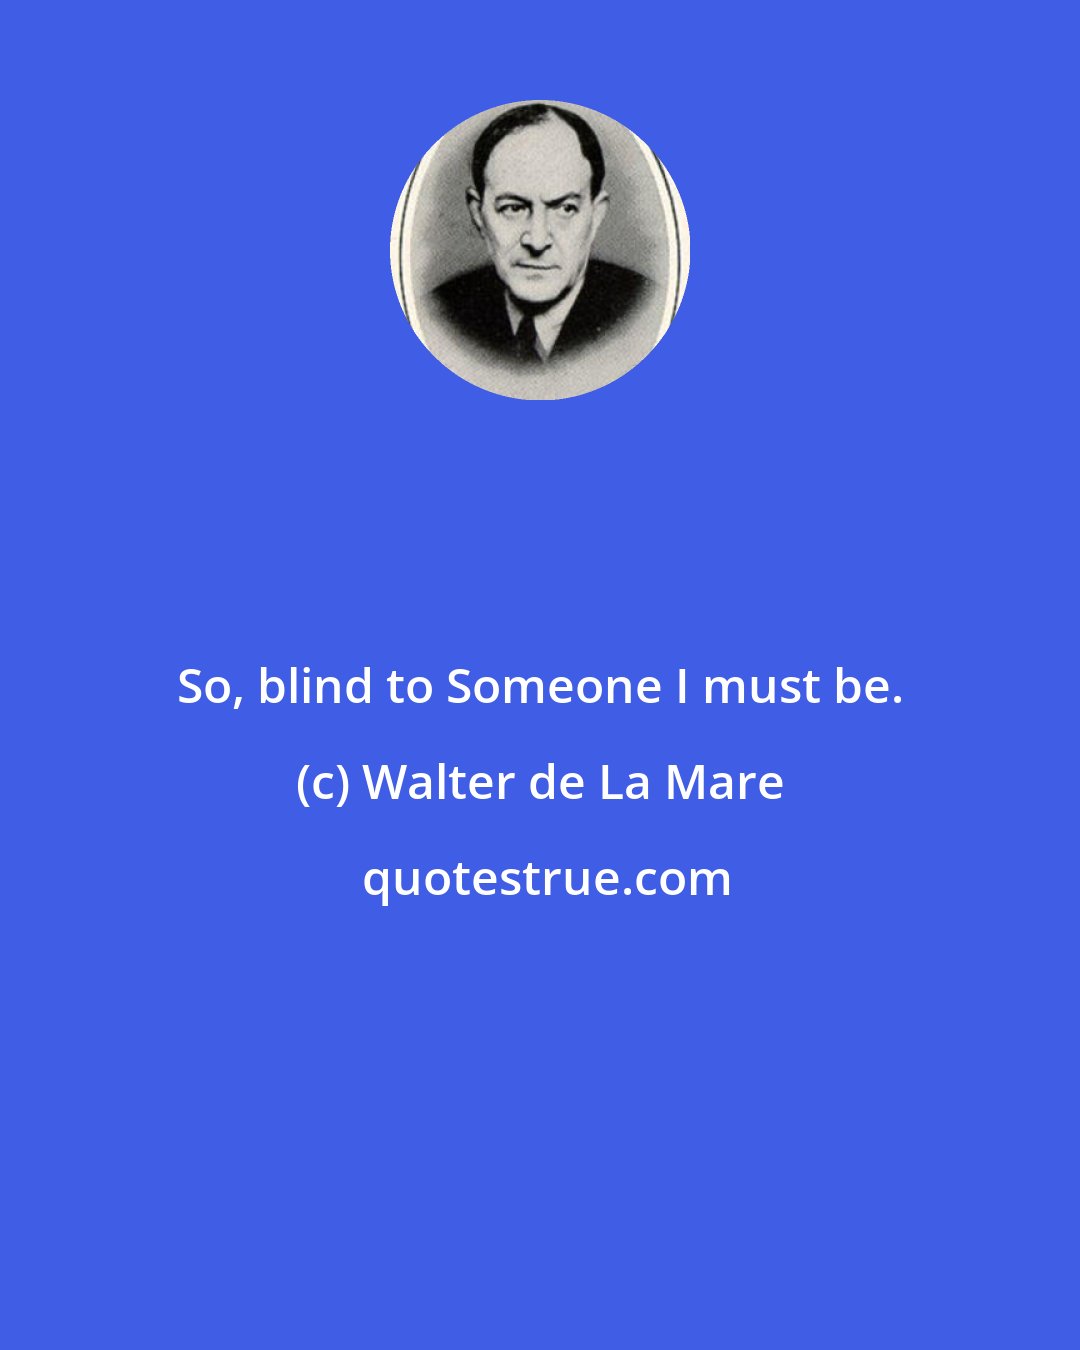 Walter de La Mare: So, blind to Someone I must be.